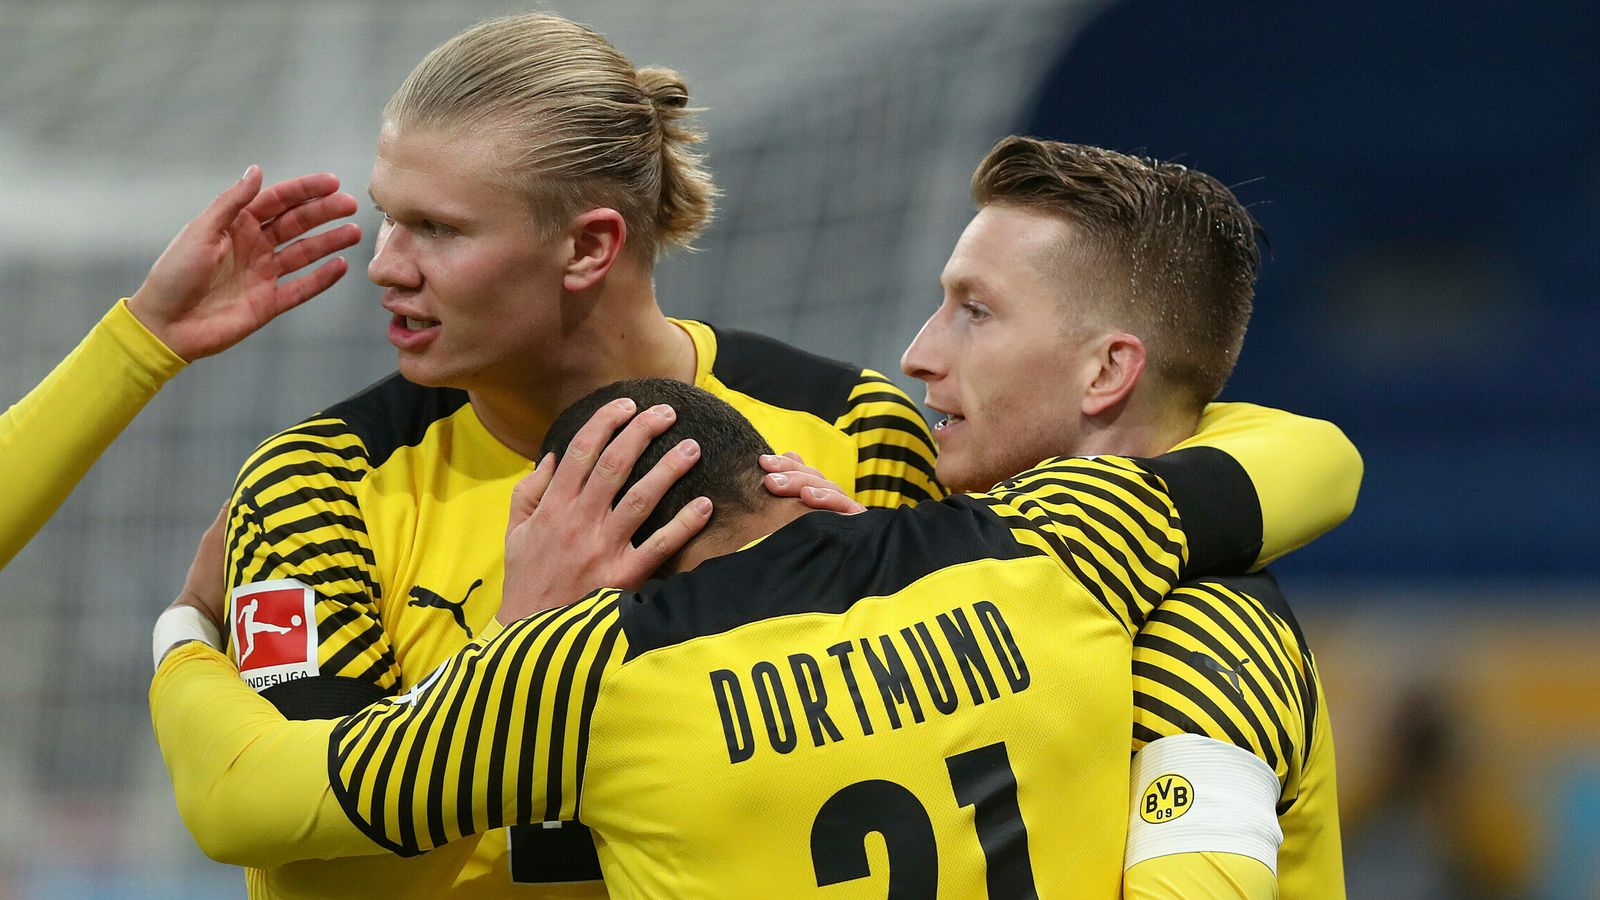 Erling Haaland on target as Borussia Dortmund beat Hoffenheim - European round-up